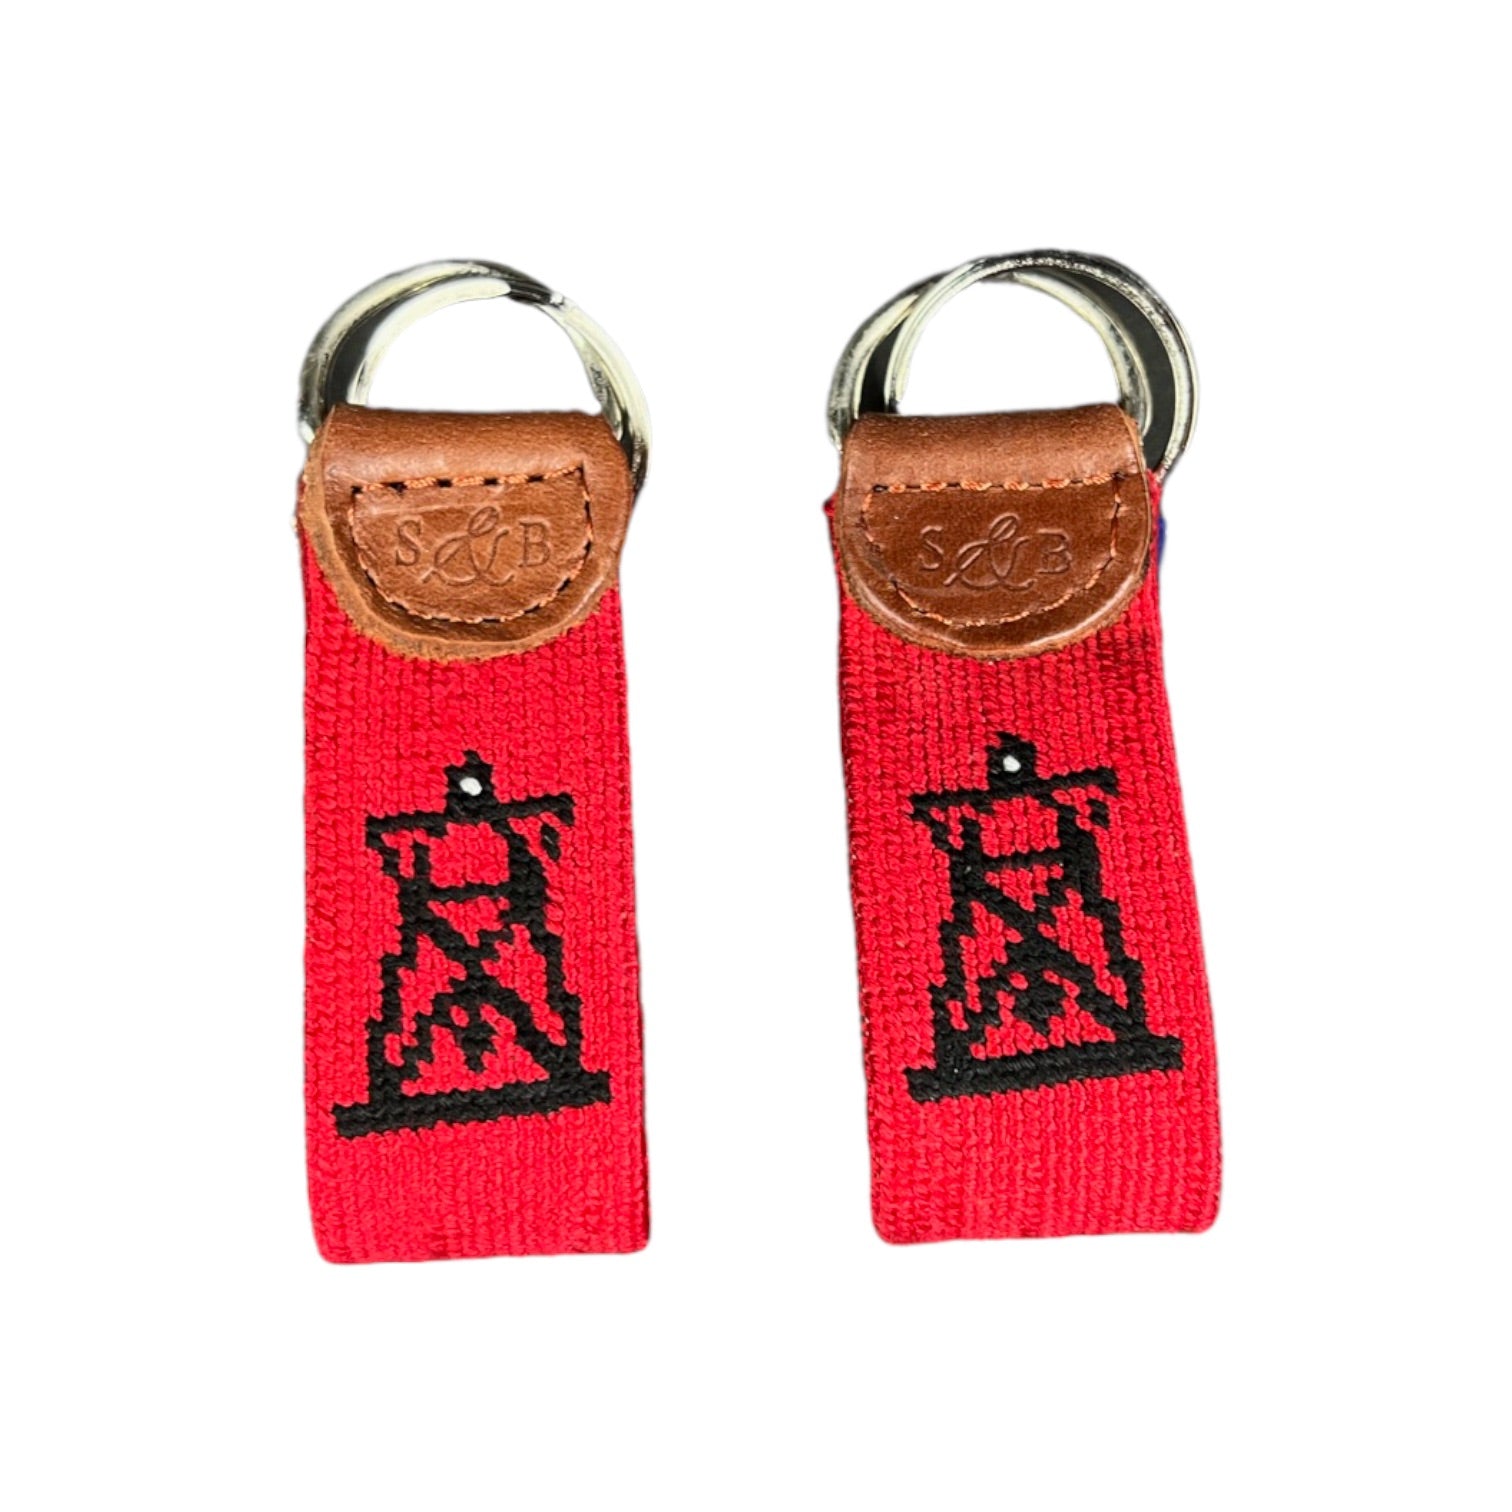 Needlepoint Buoy Keychain - Red